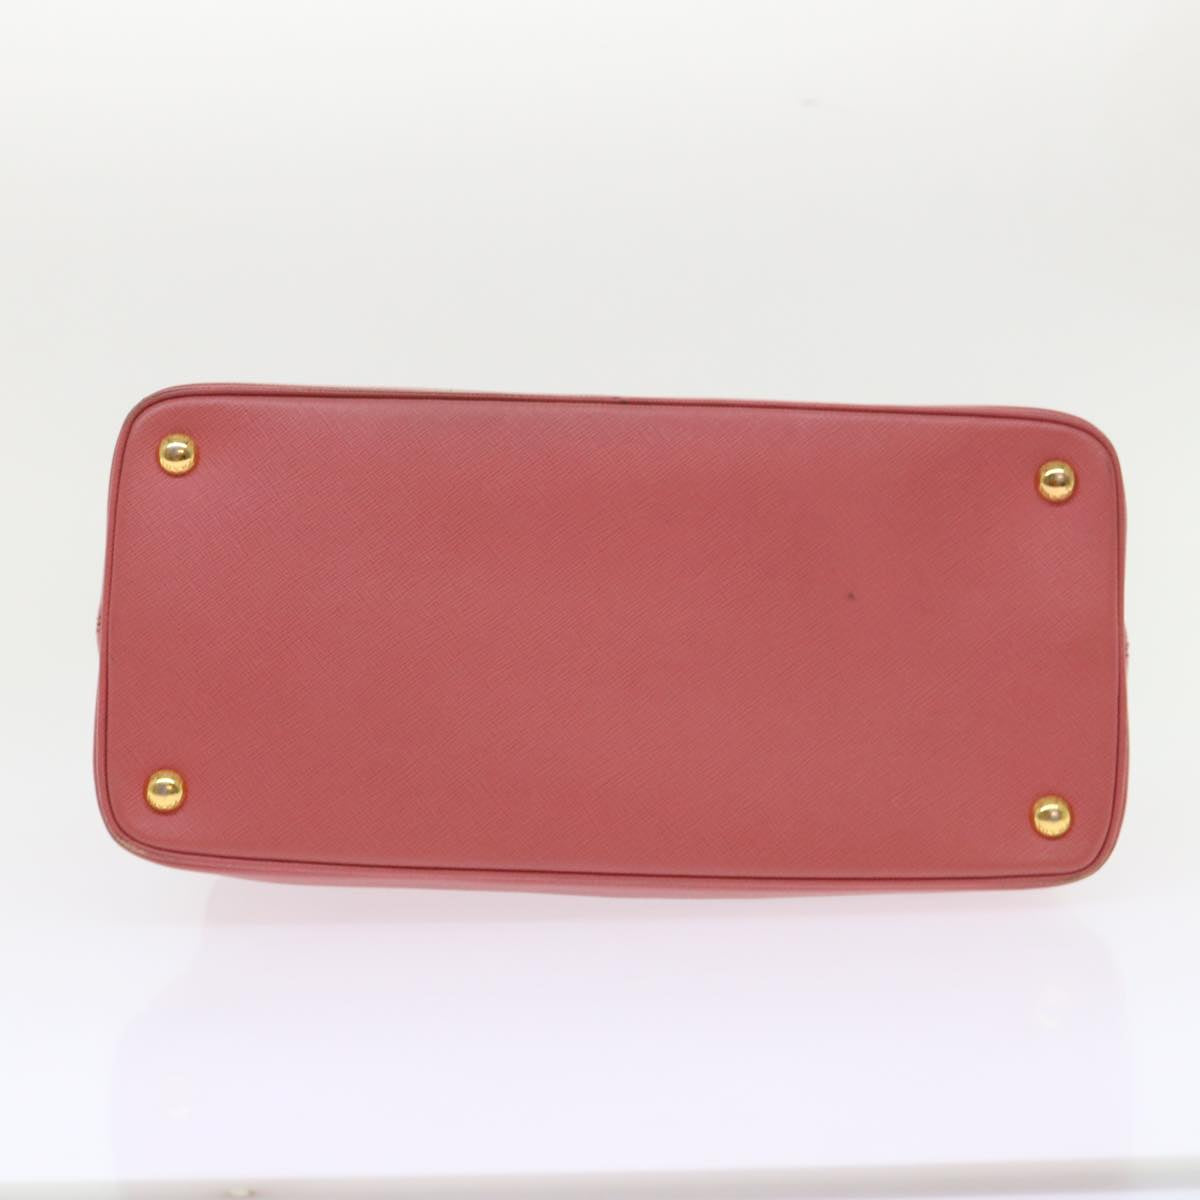 PRADA Hand Bag Safiano leather Pink Auth ep1018